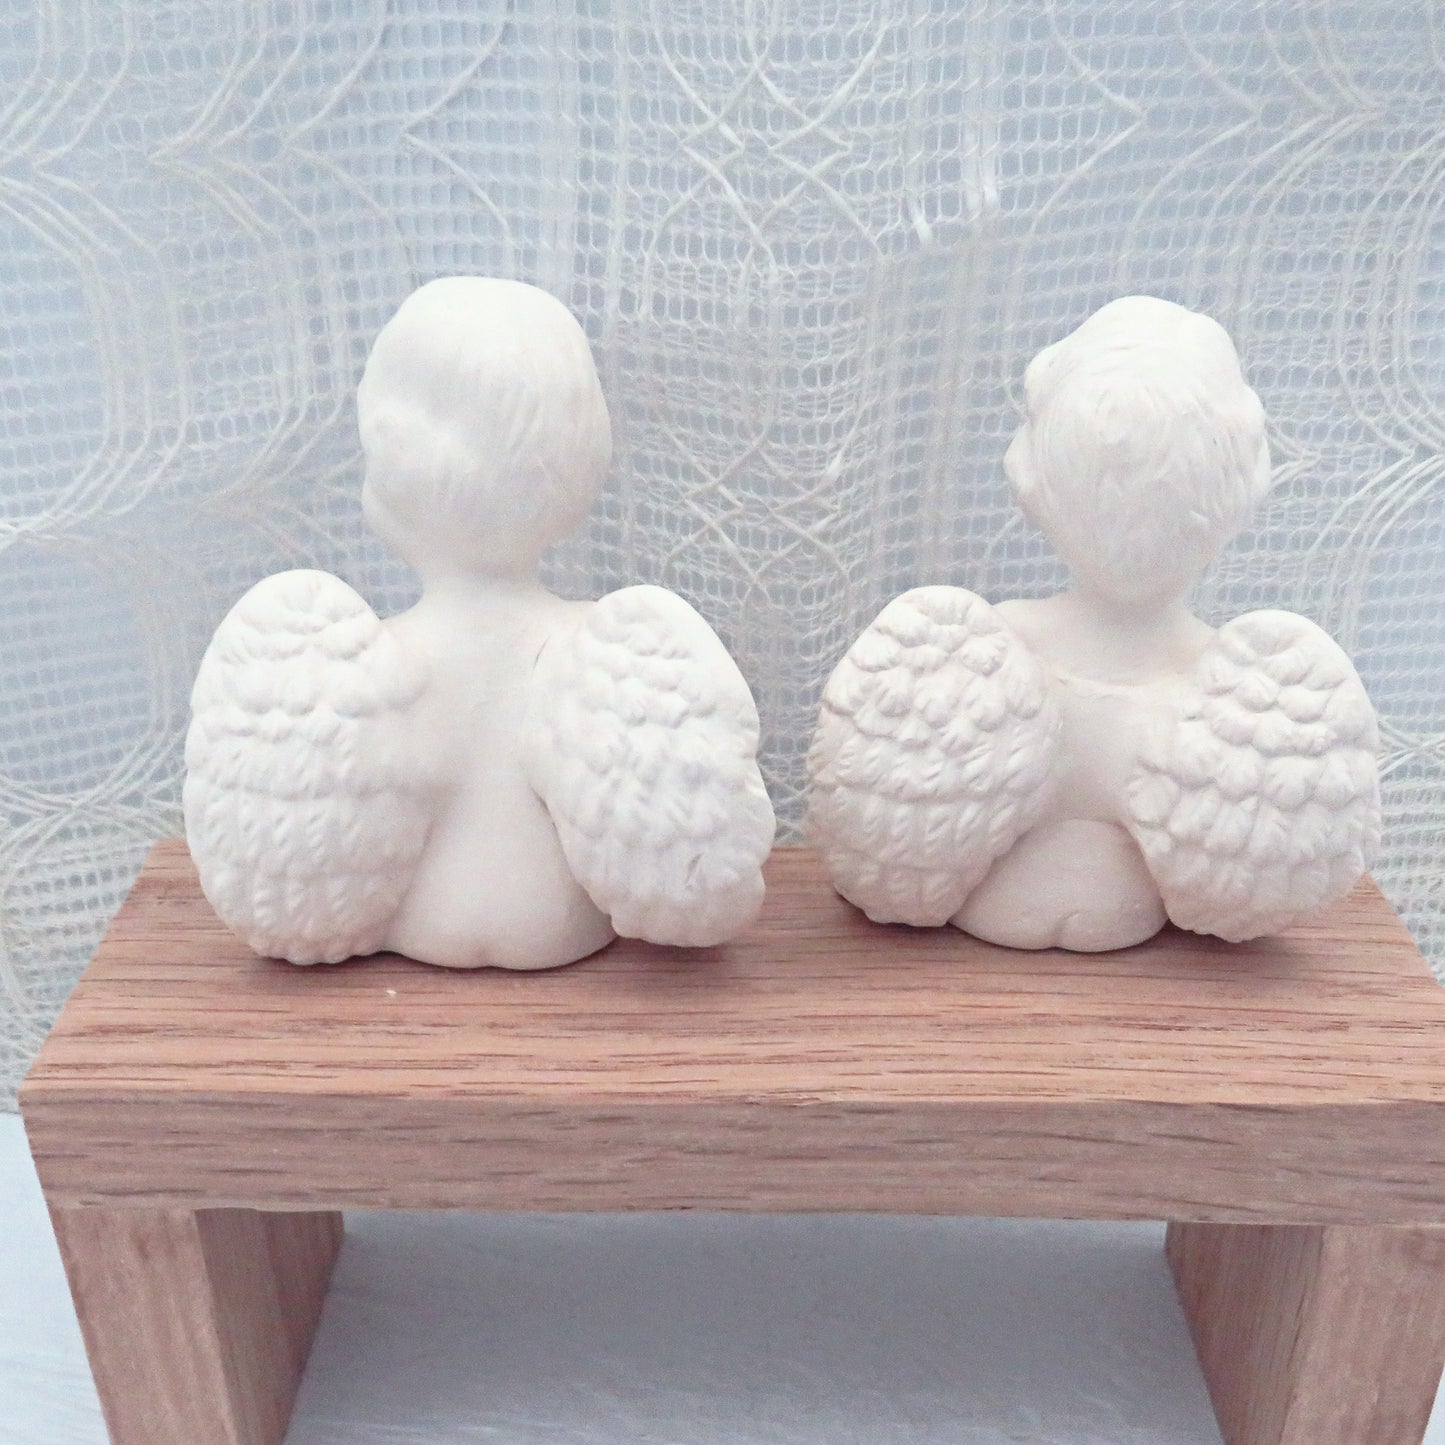 Handmade Paintable Ceramic Cherub Figuines, Set of 2 Ready to Paint Ceramic Cherub Angel Statues, Cherub Statues Telling Secrets te